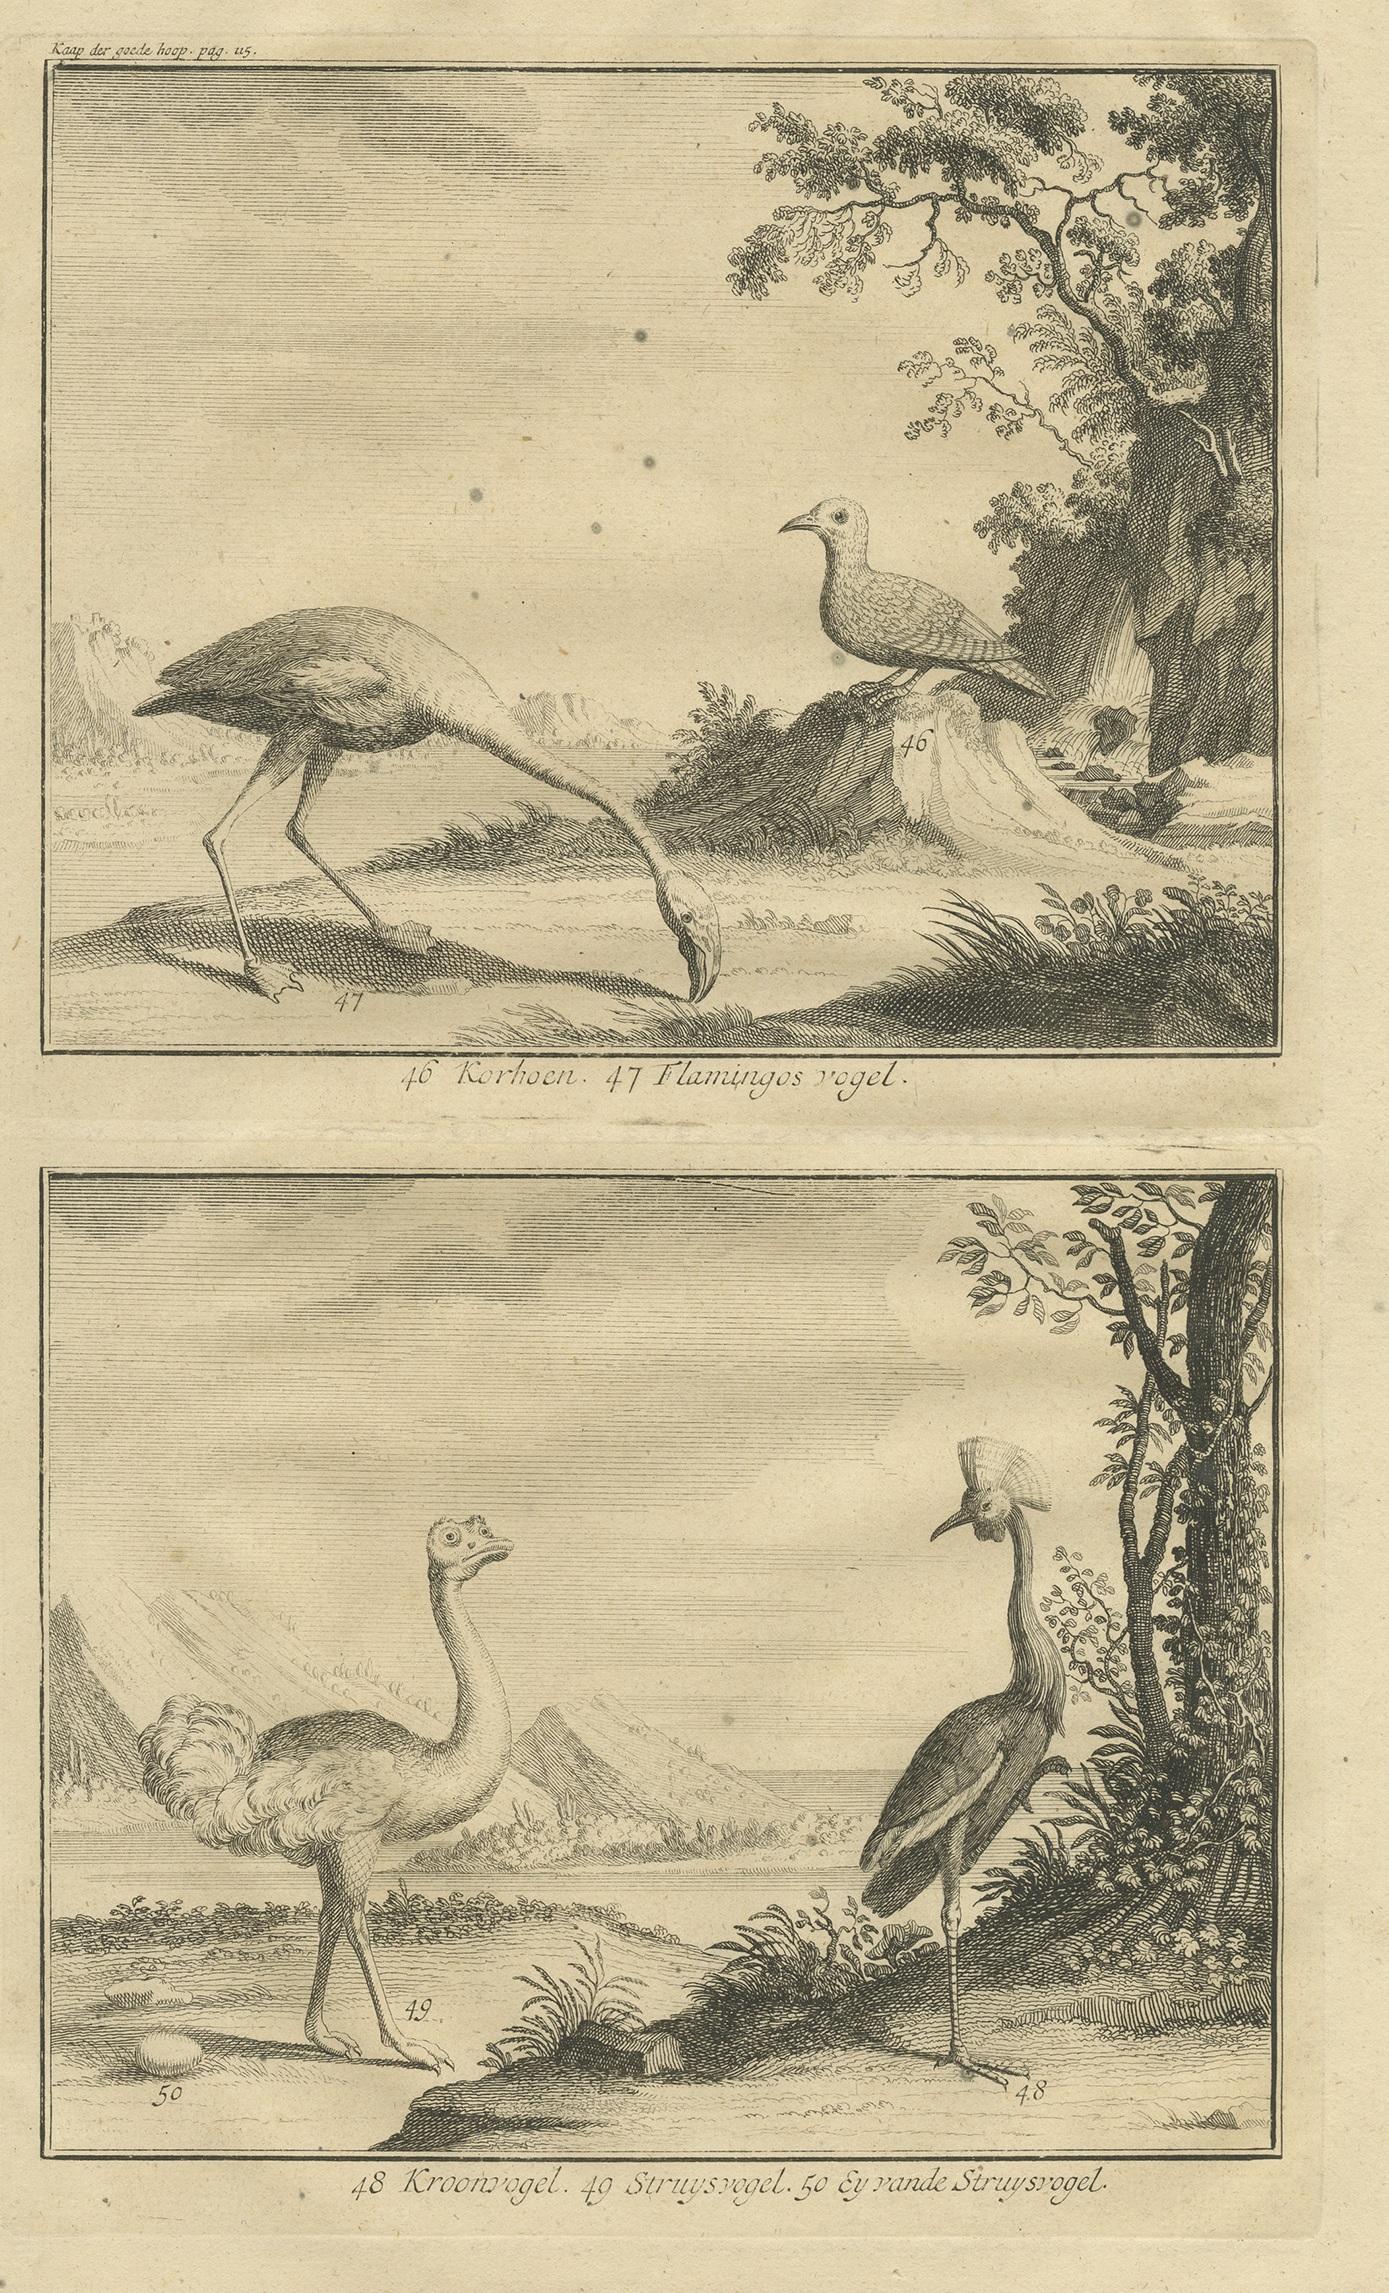 Antiker Vogeldruck mit dem Titel '49. Korhoen, 47. Flamingos vogel, 48. Kroonvogel, 49. Struysvogel, 50. Ey van de Struysvogel